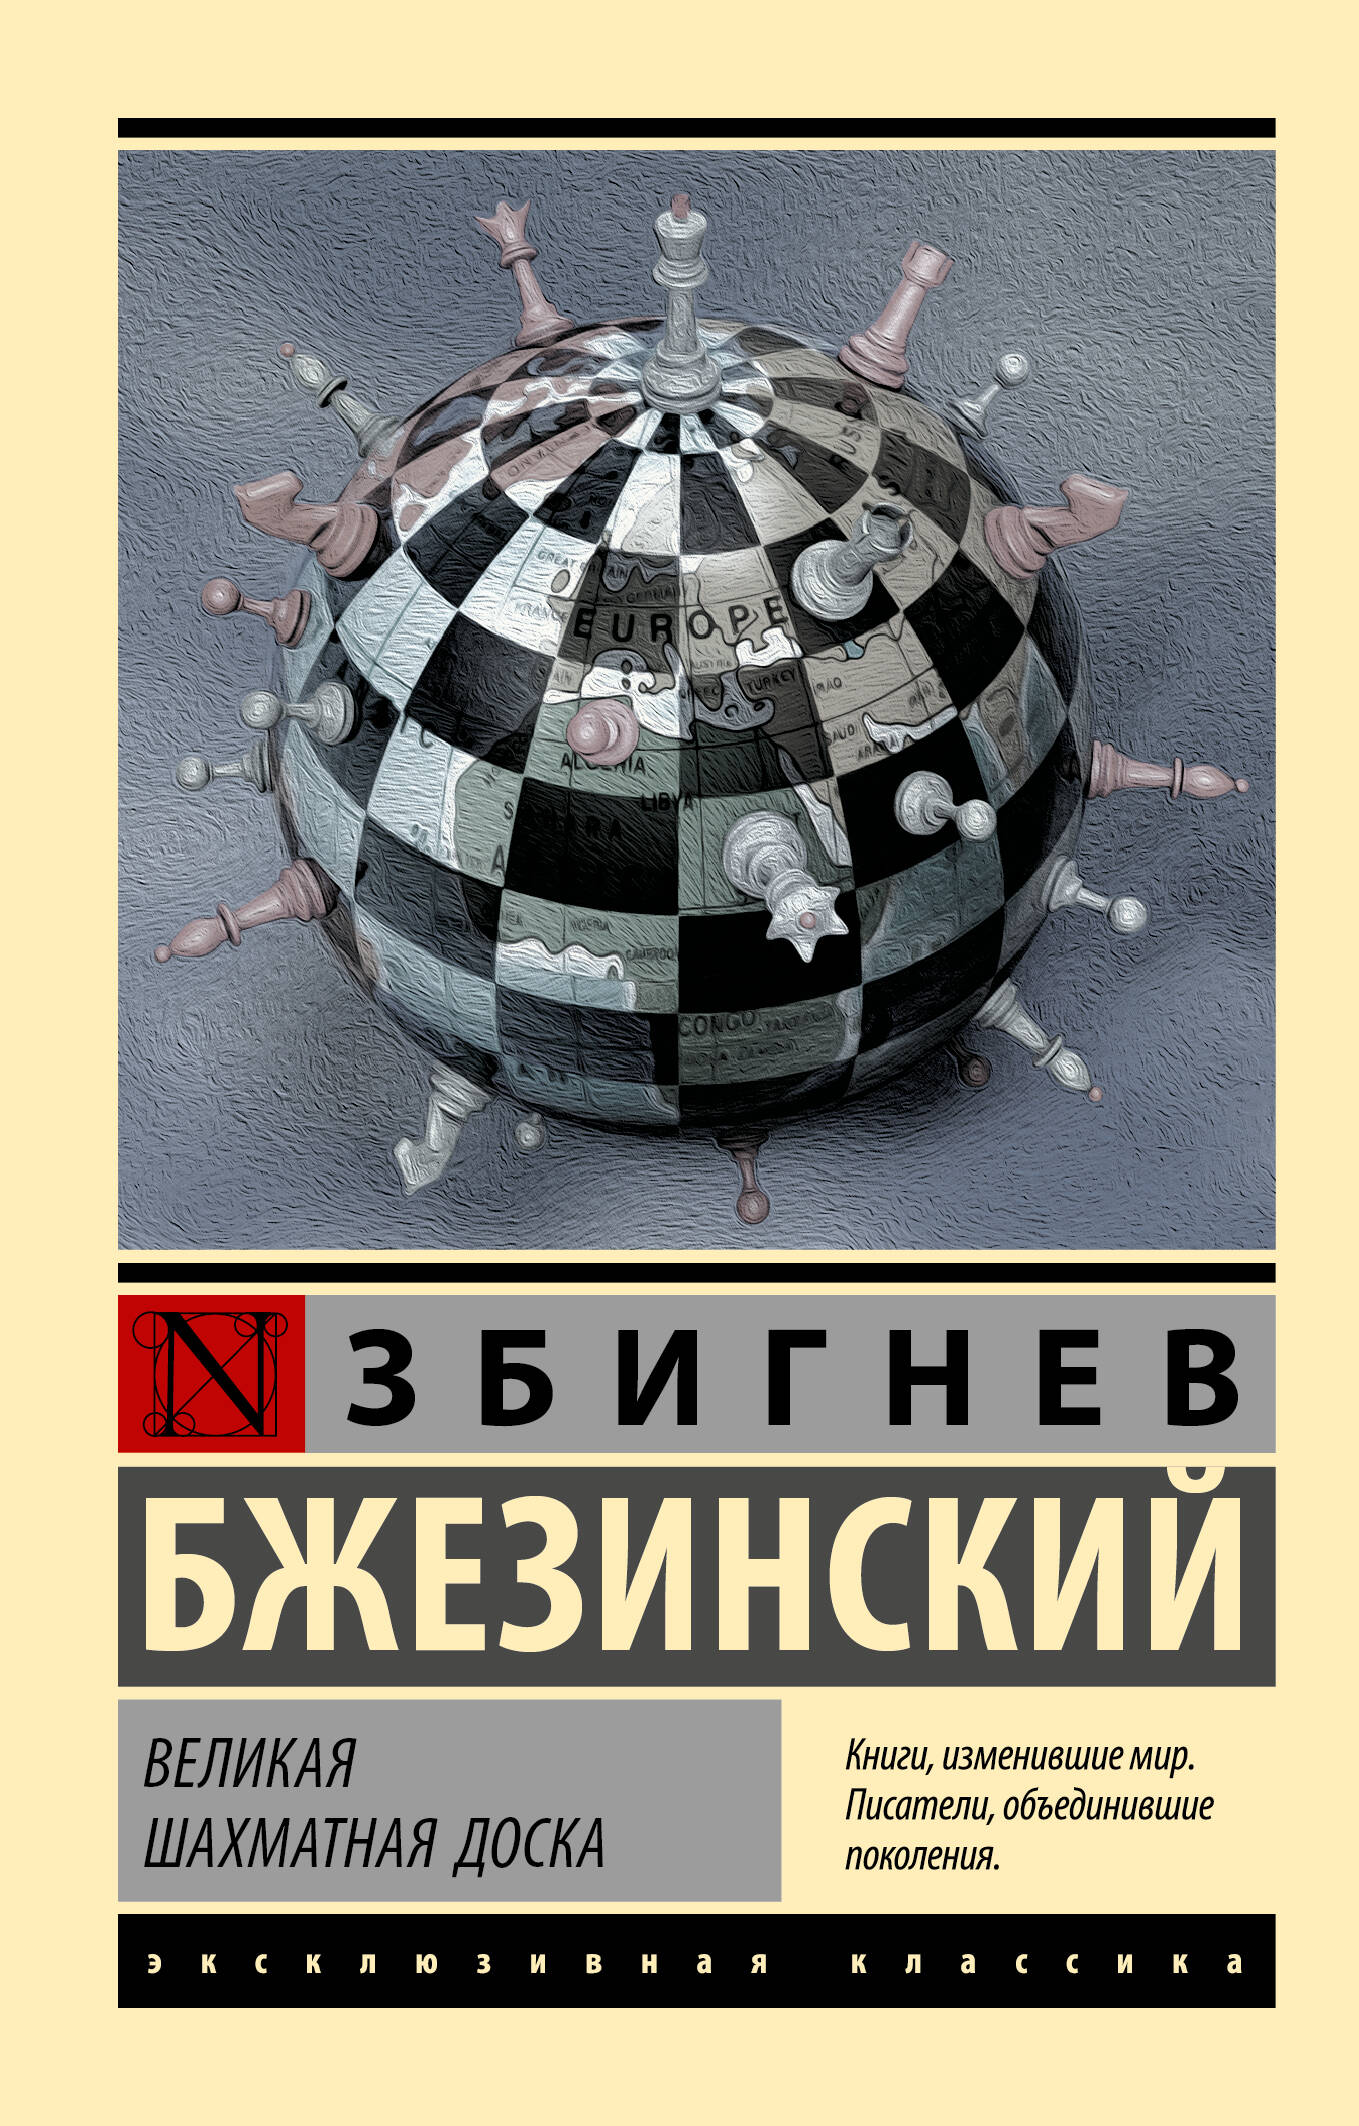 Бжезинский Збигнев - Великая шахматная доска